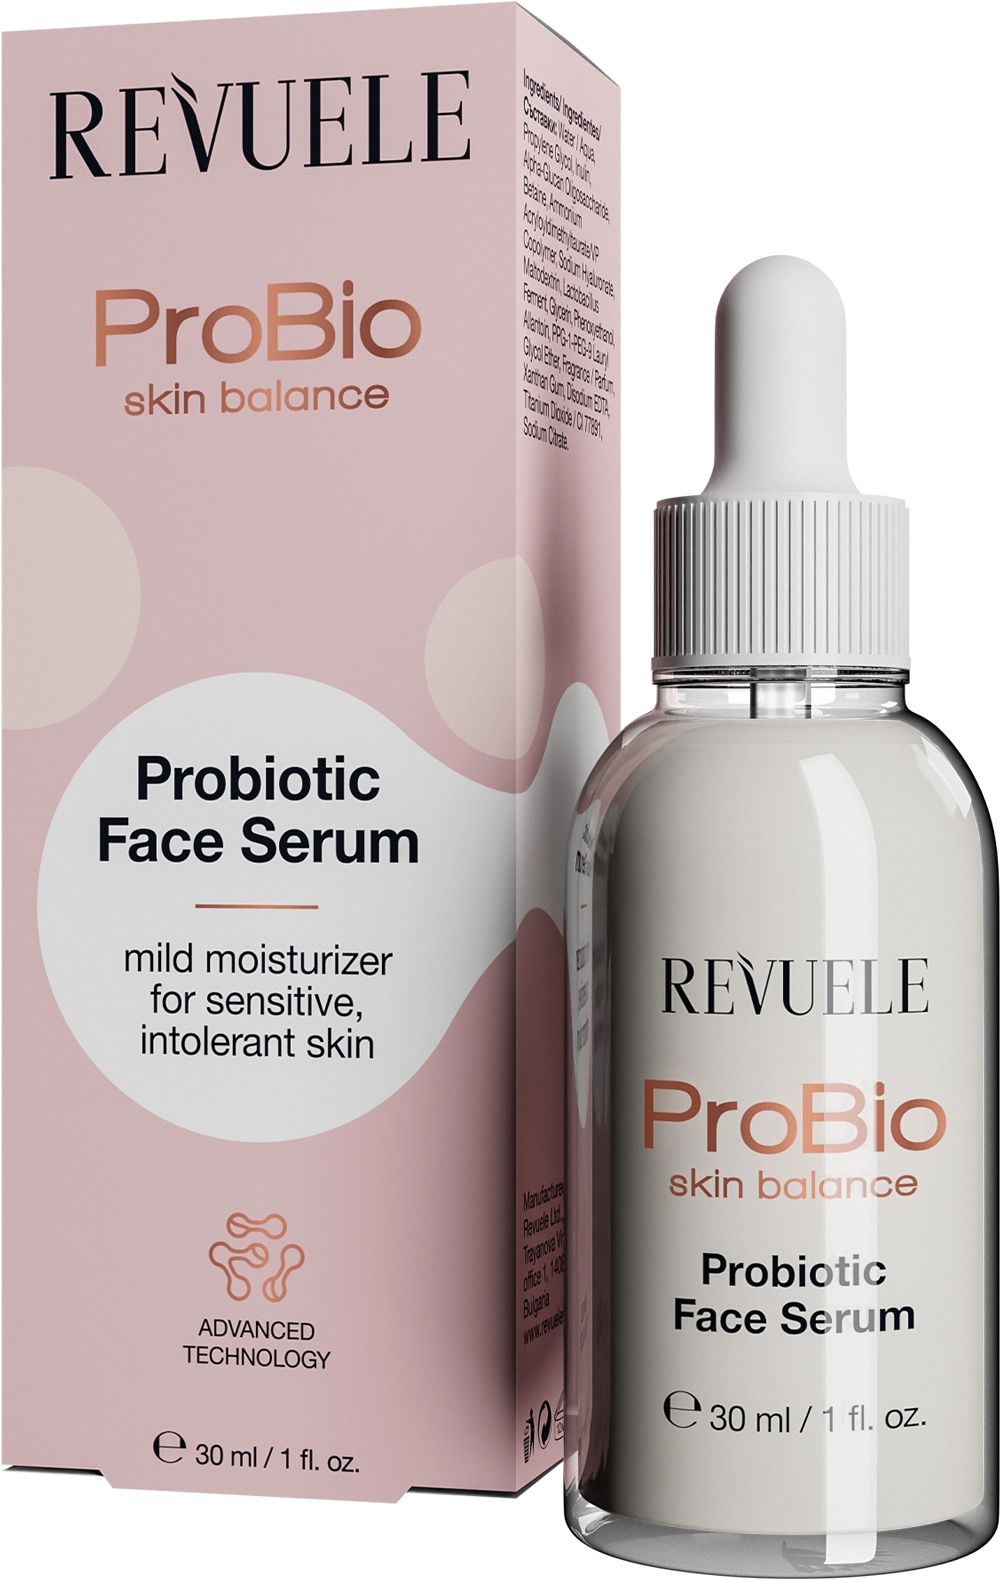 Сыворотка для лица с пробиотиками - Revuele Probio Skin Balance Probiotic Face Serum, 30 мл - фото N3